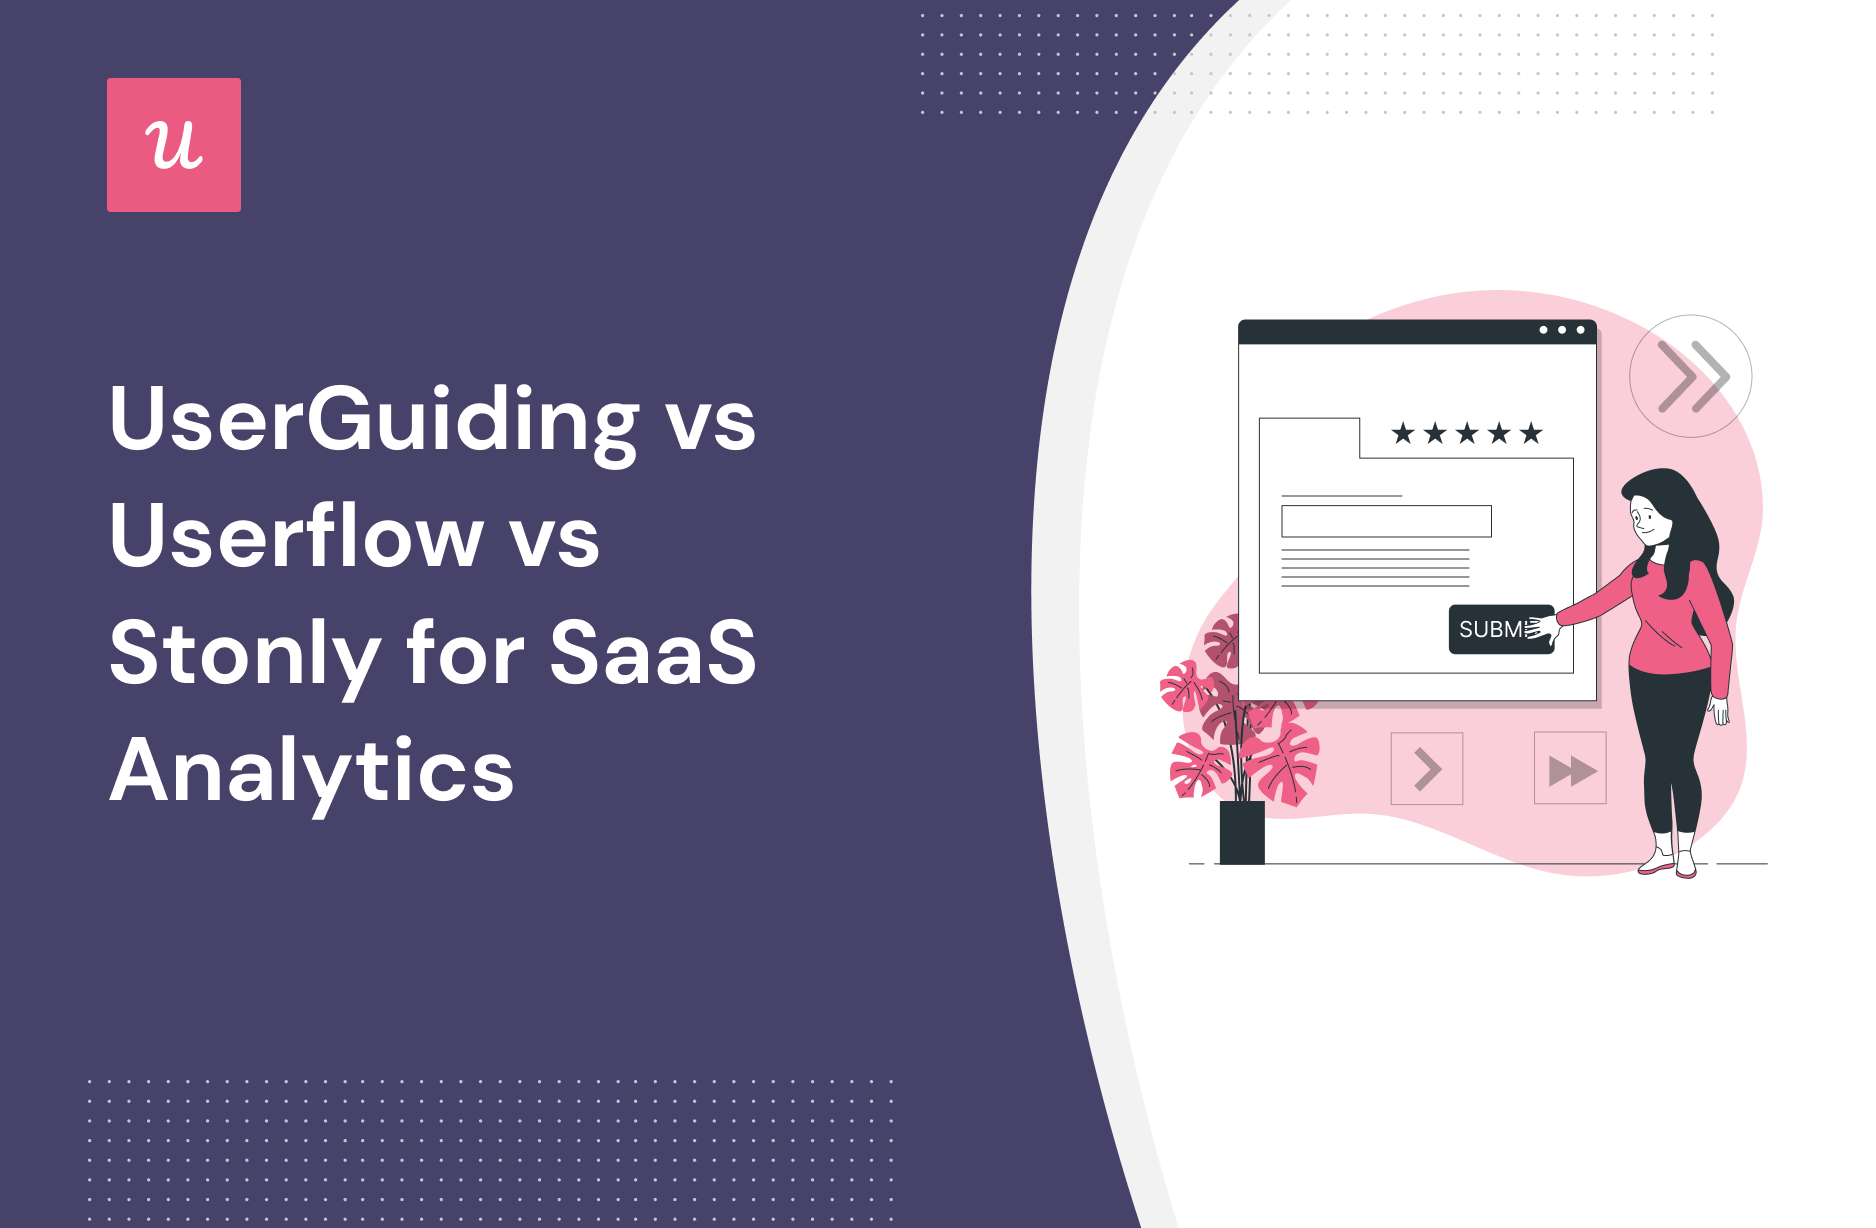 UserGuiding vs Userflow vs Stonly for SaaS Analytics